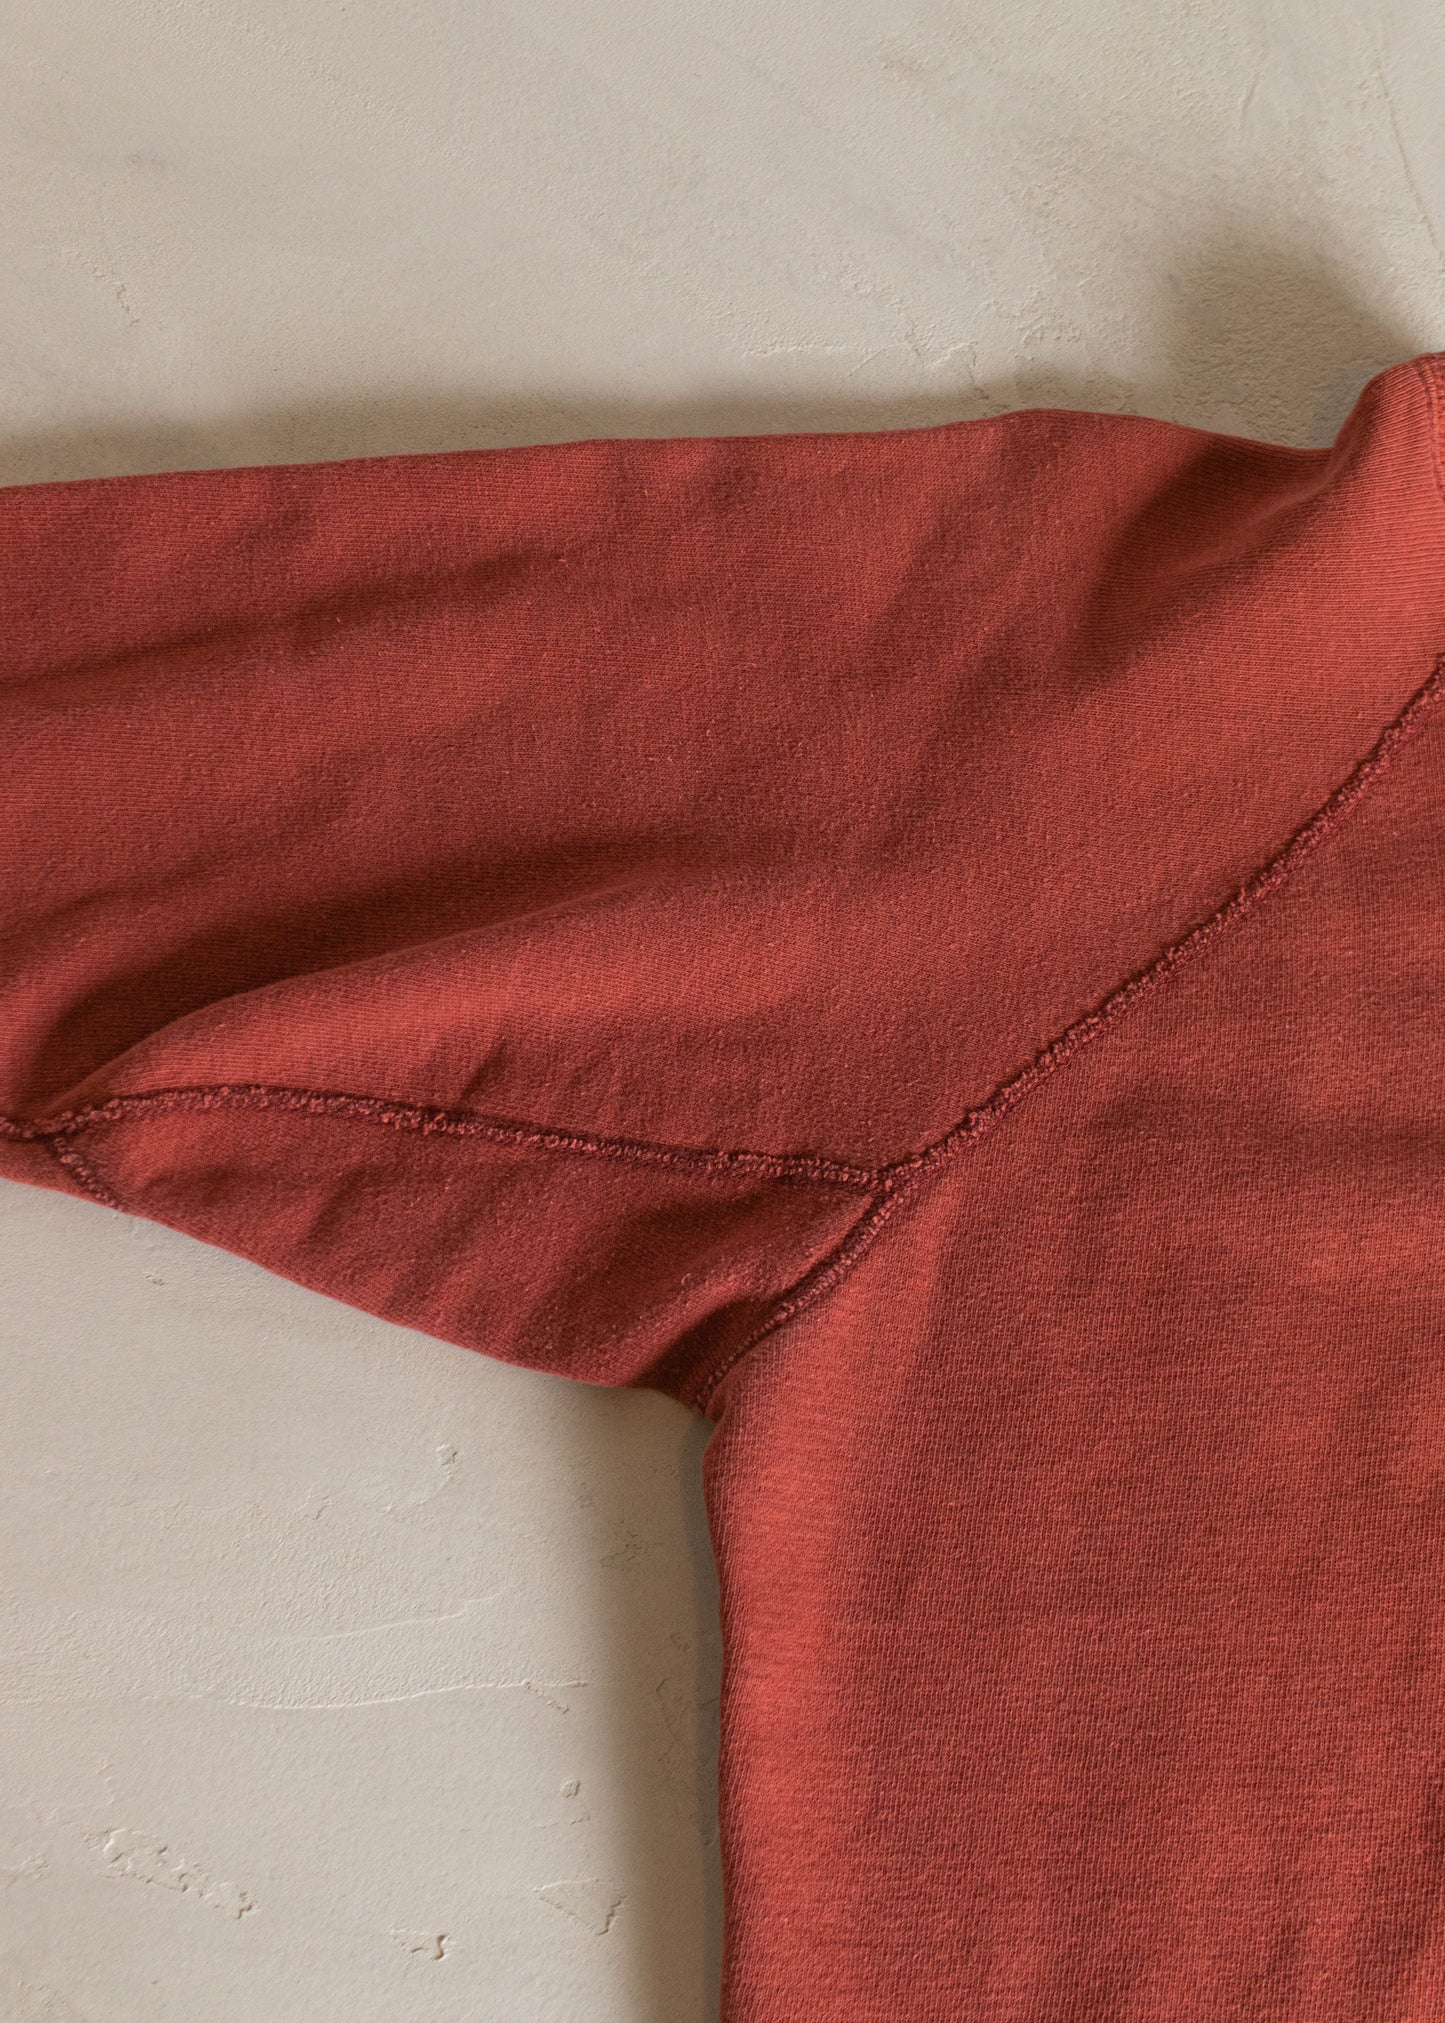 1970s Raglan Sweatshirt Size M/L